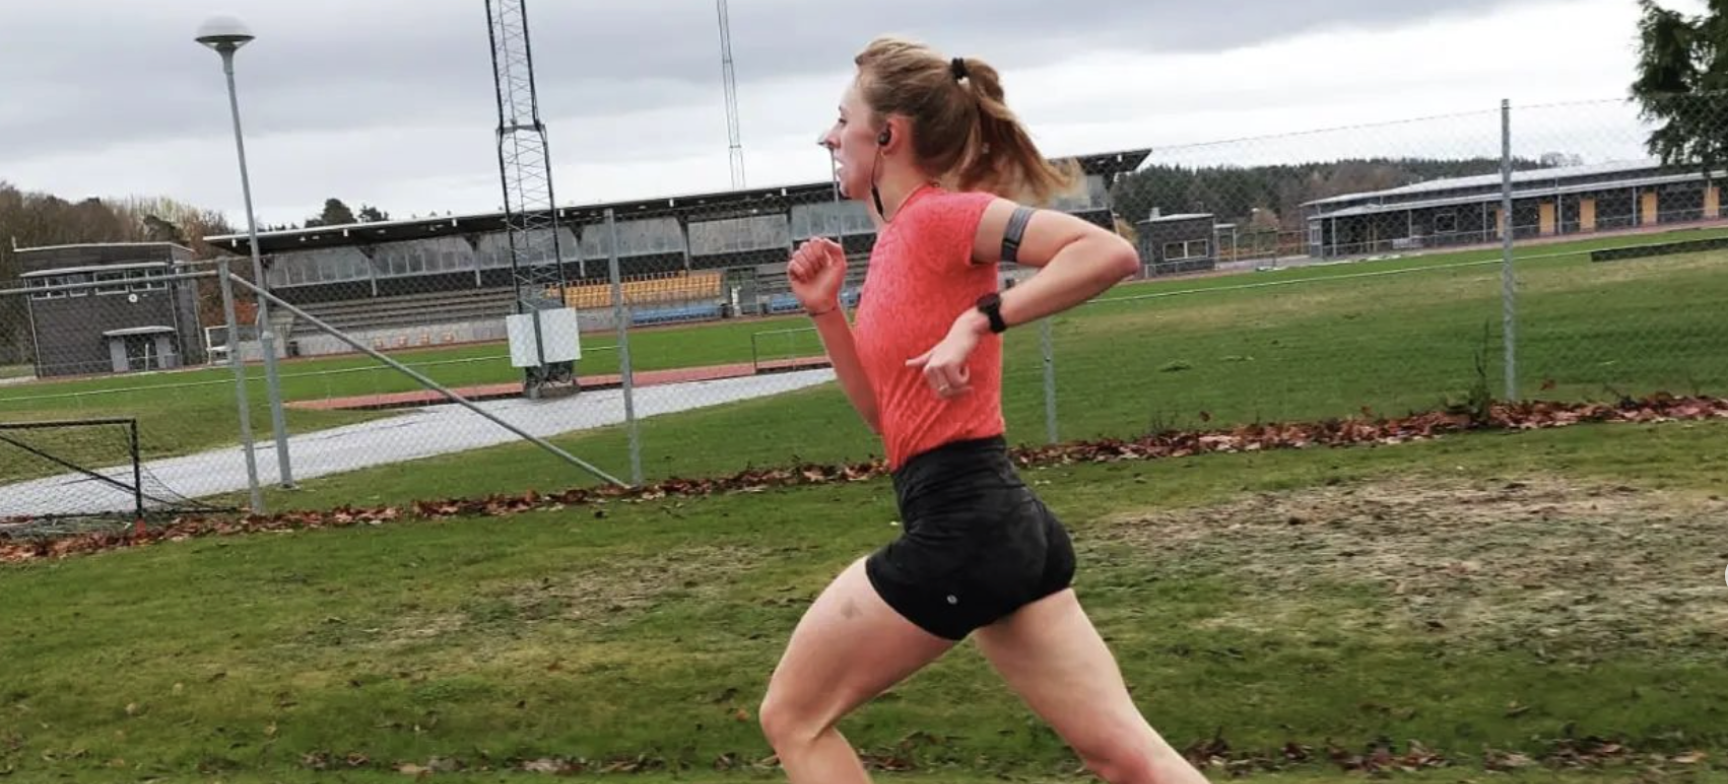 Esther Visser running during a training session